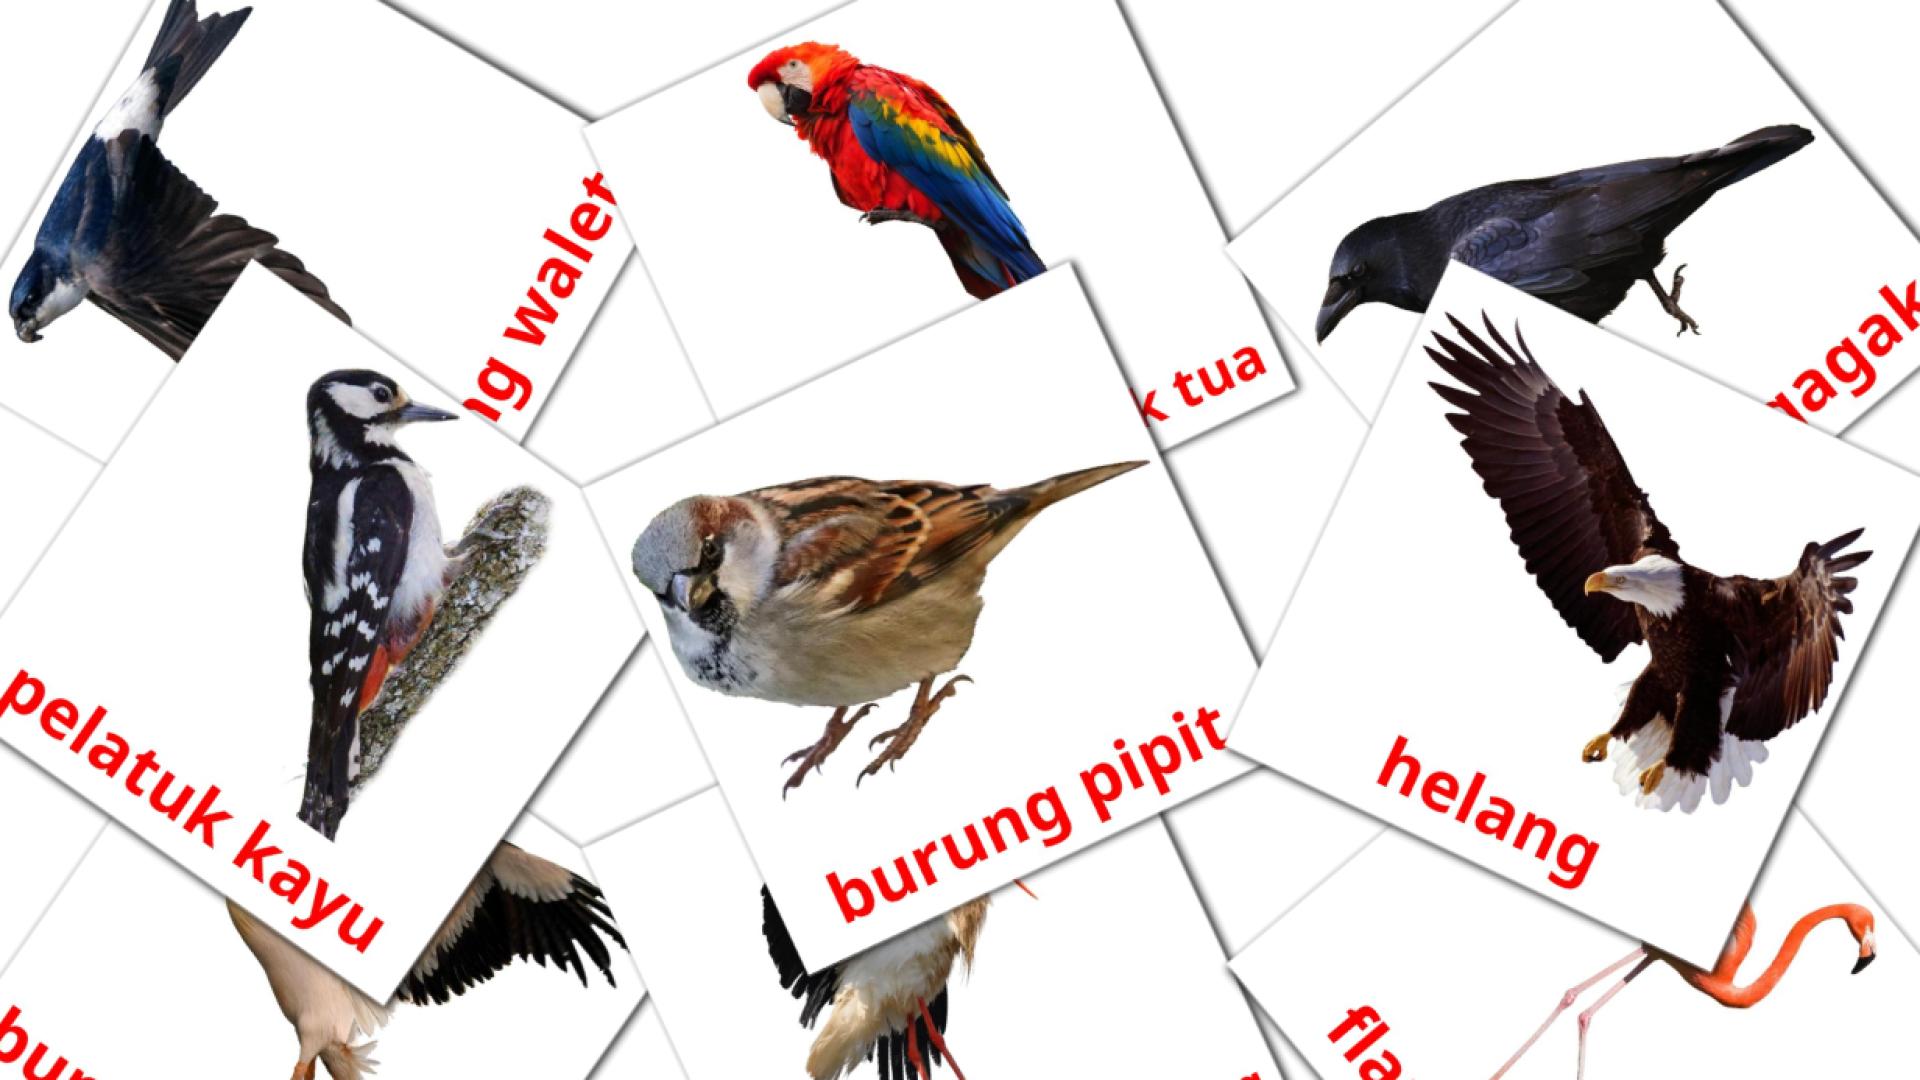 18 burung liar flashcards